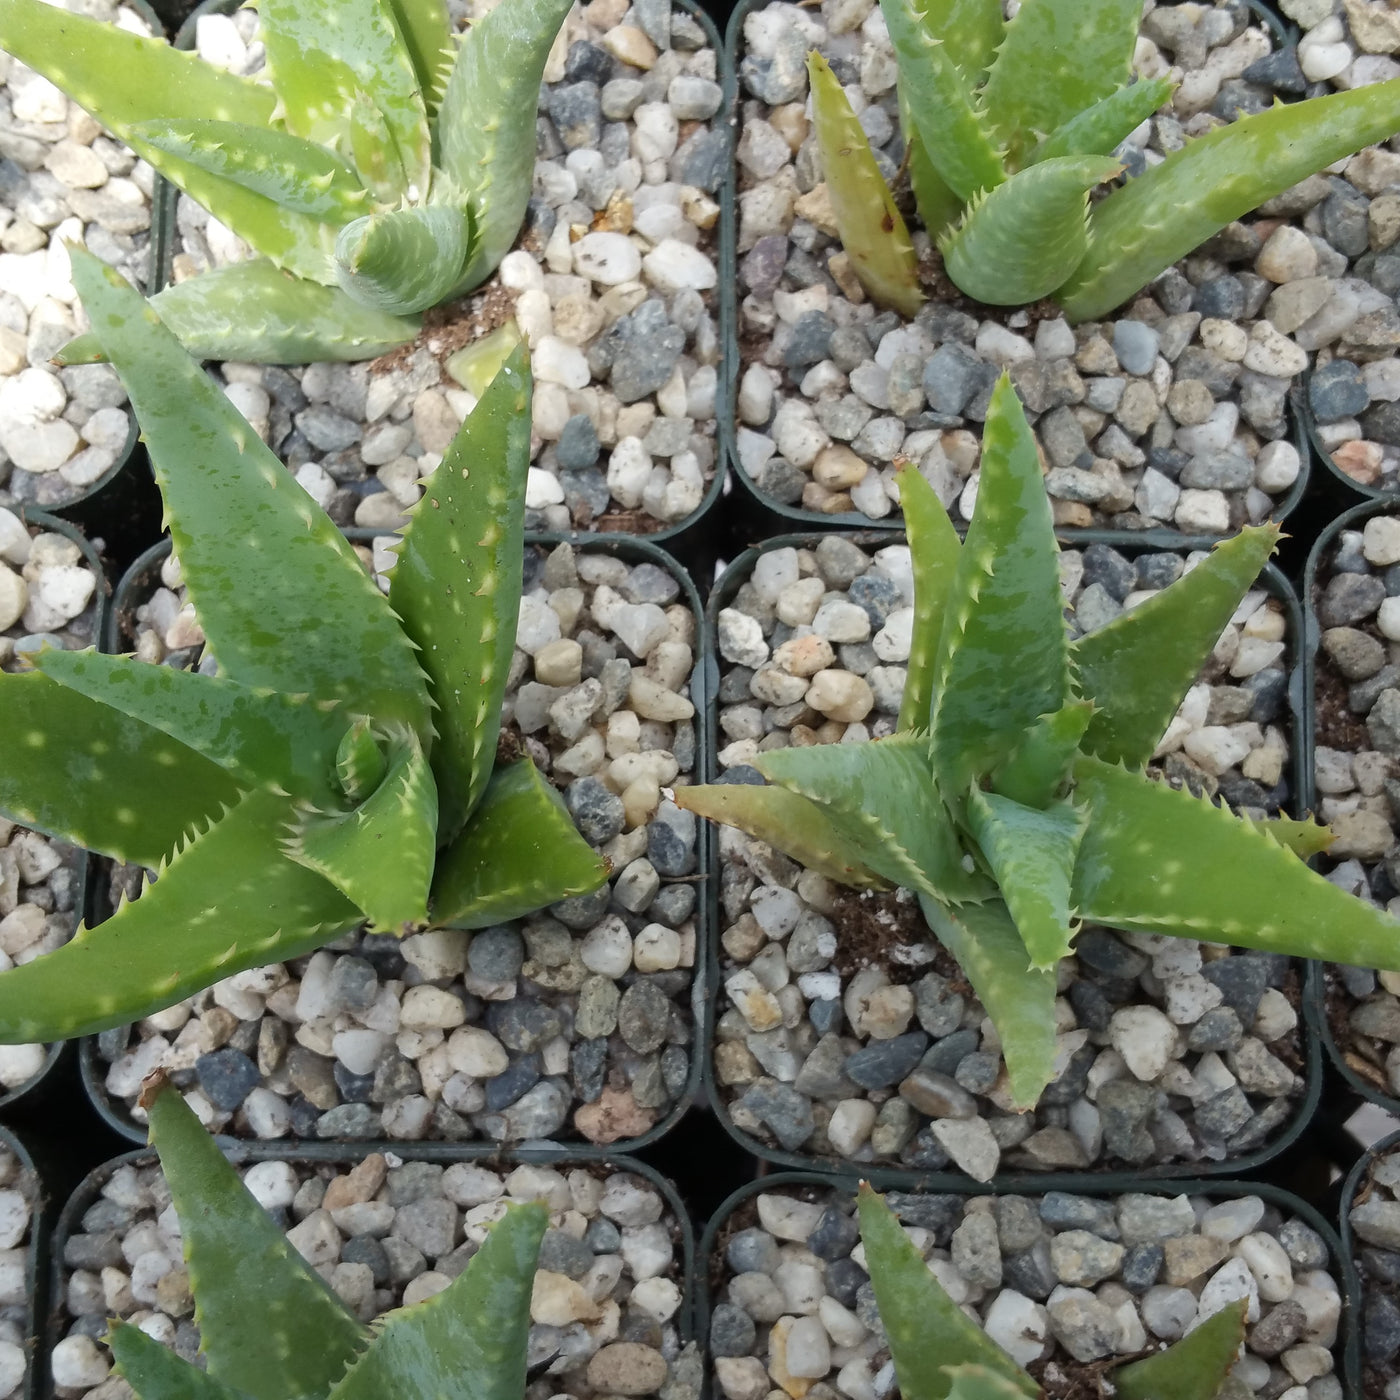 Aloe California medicinal plant